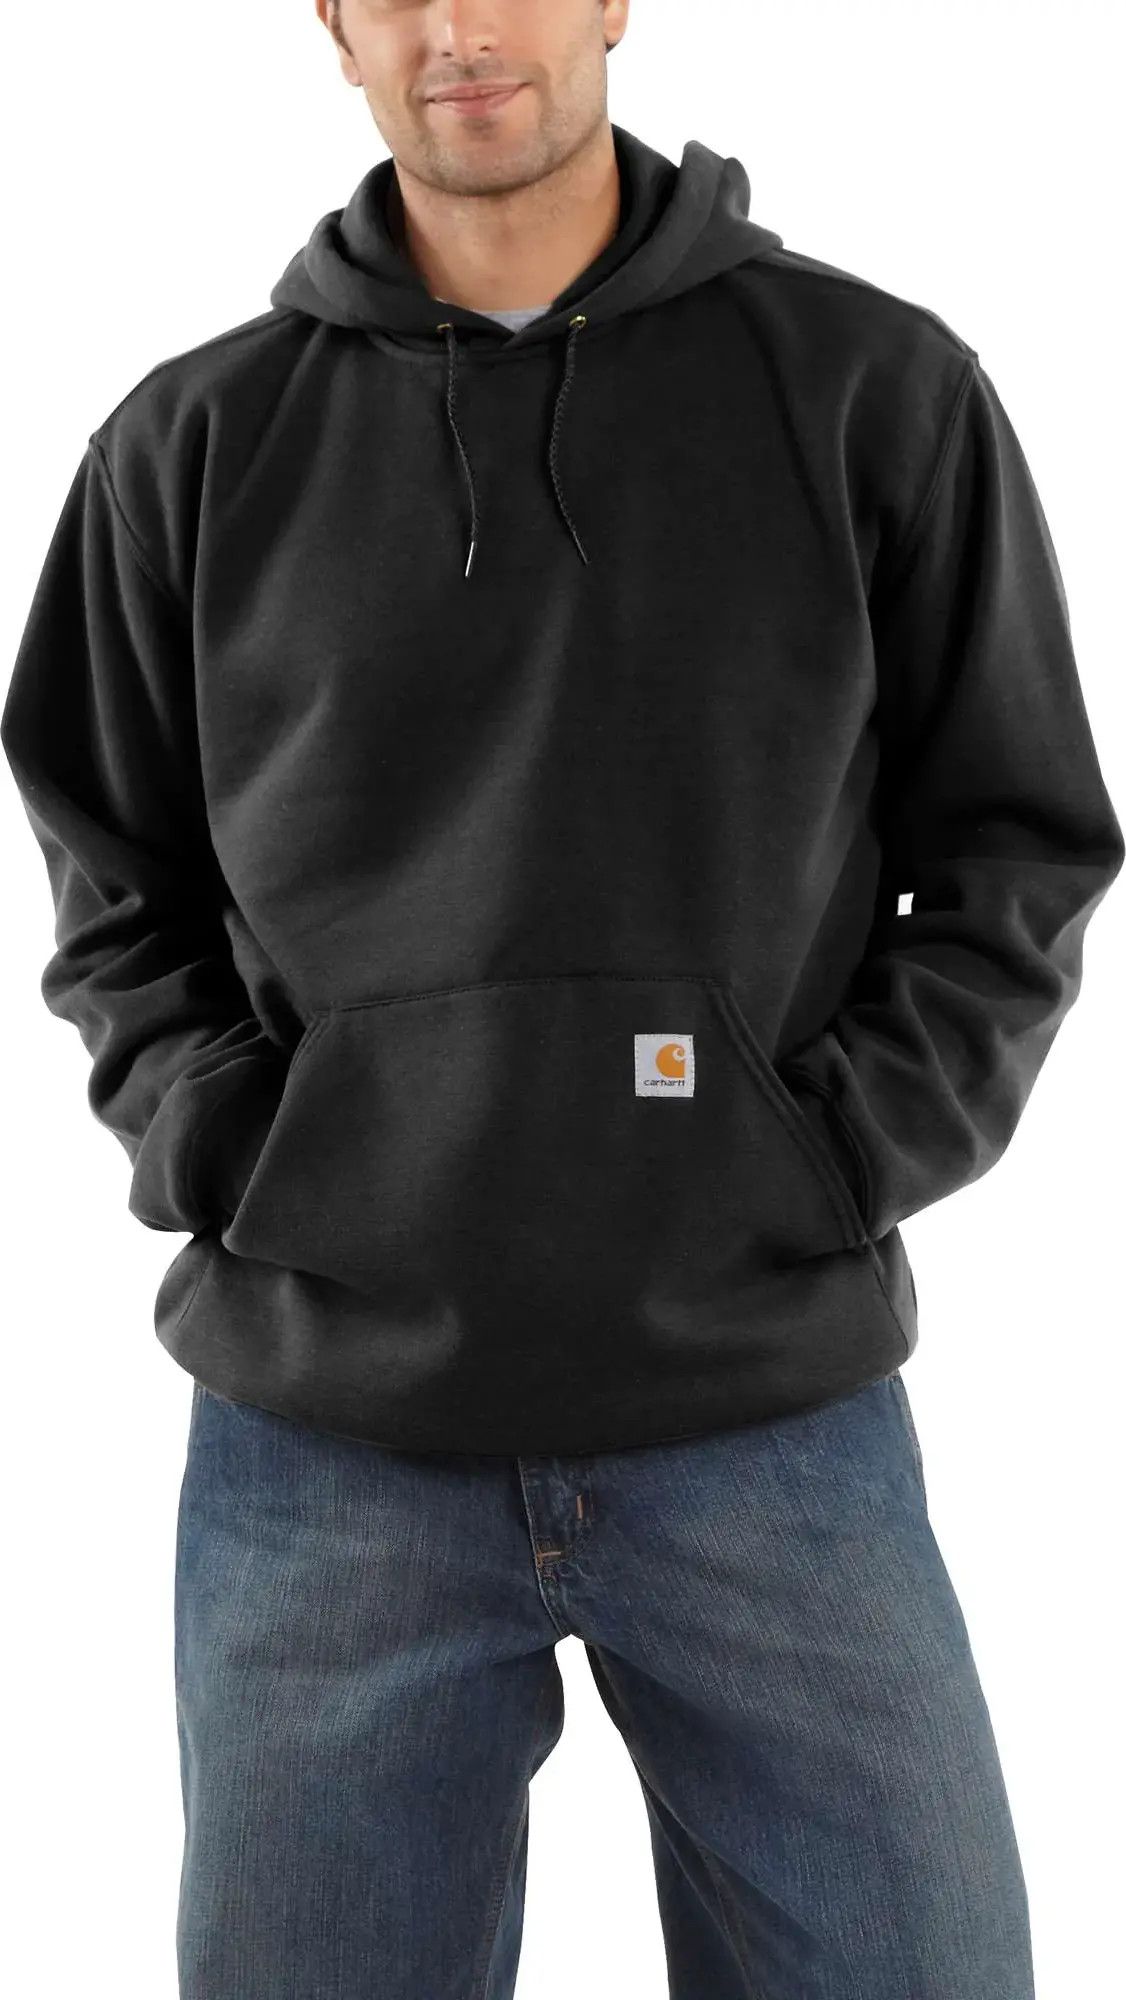 Carhartt Men's Hooded Sweatshirt Black